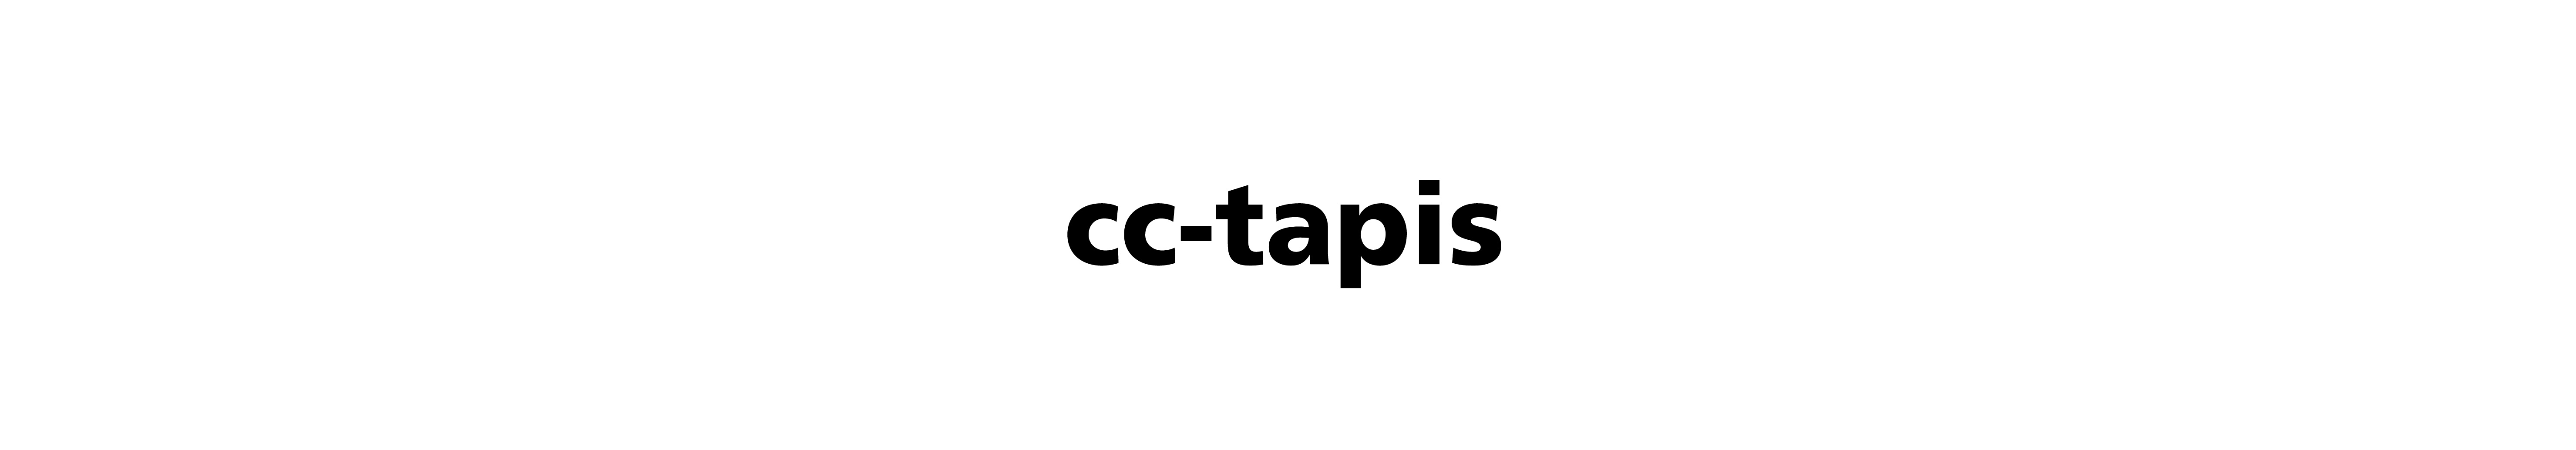 cc-tapis monochrome logo